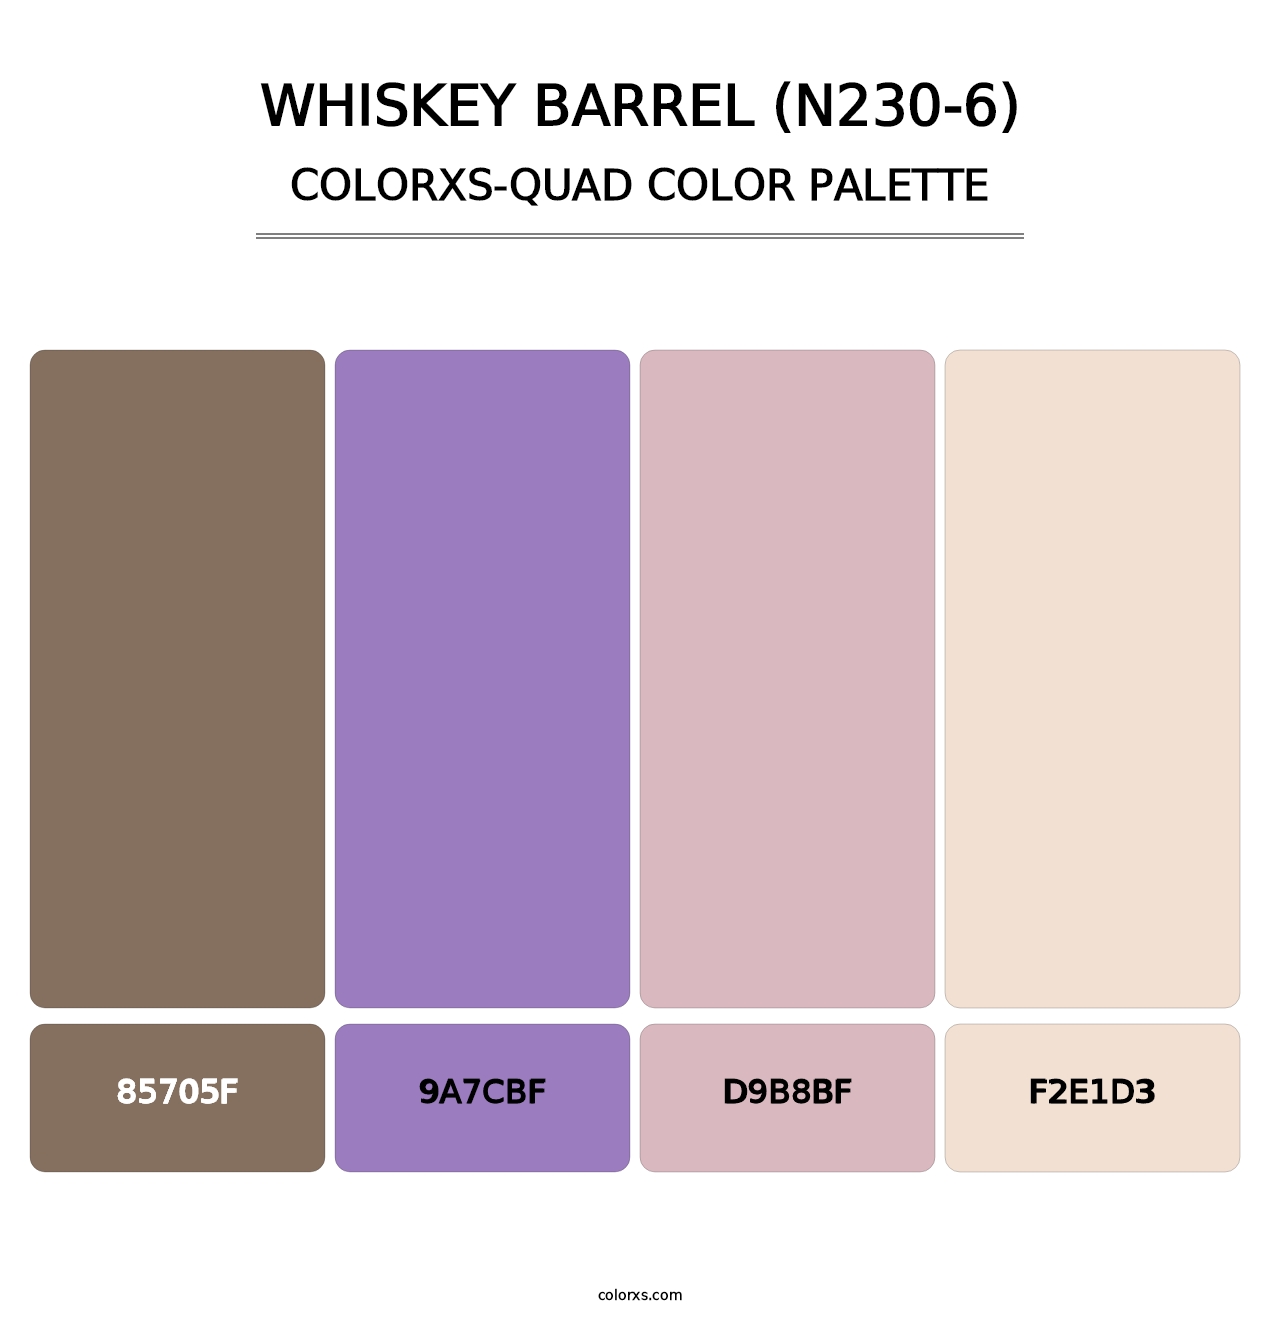 Whiskey Barrel (N230-6) - Colorxs Quad Palette